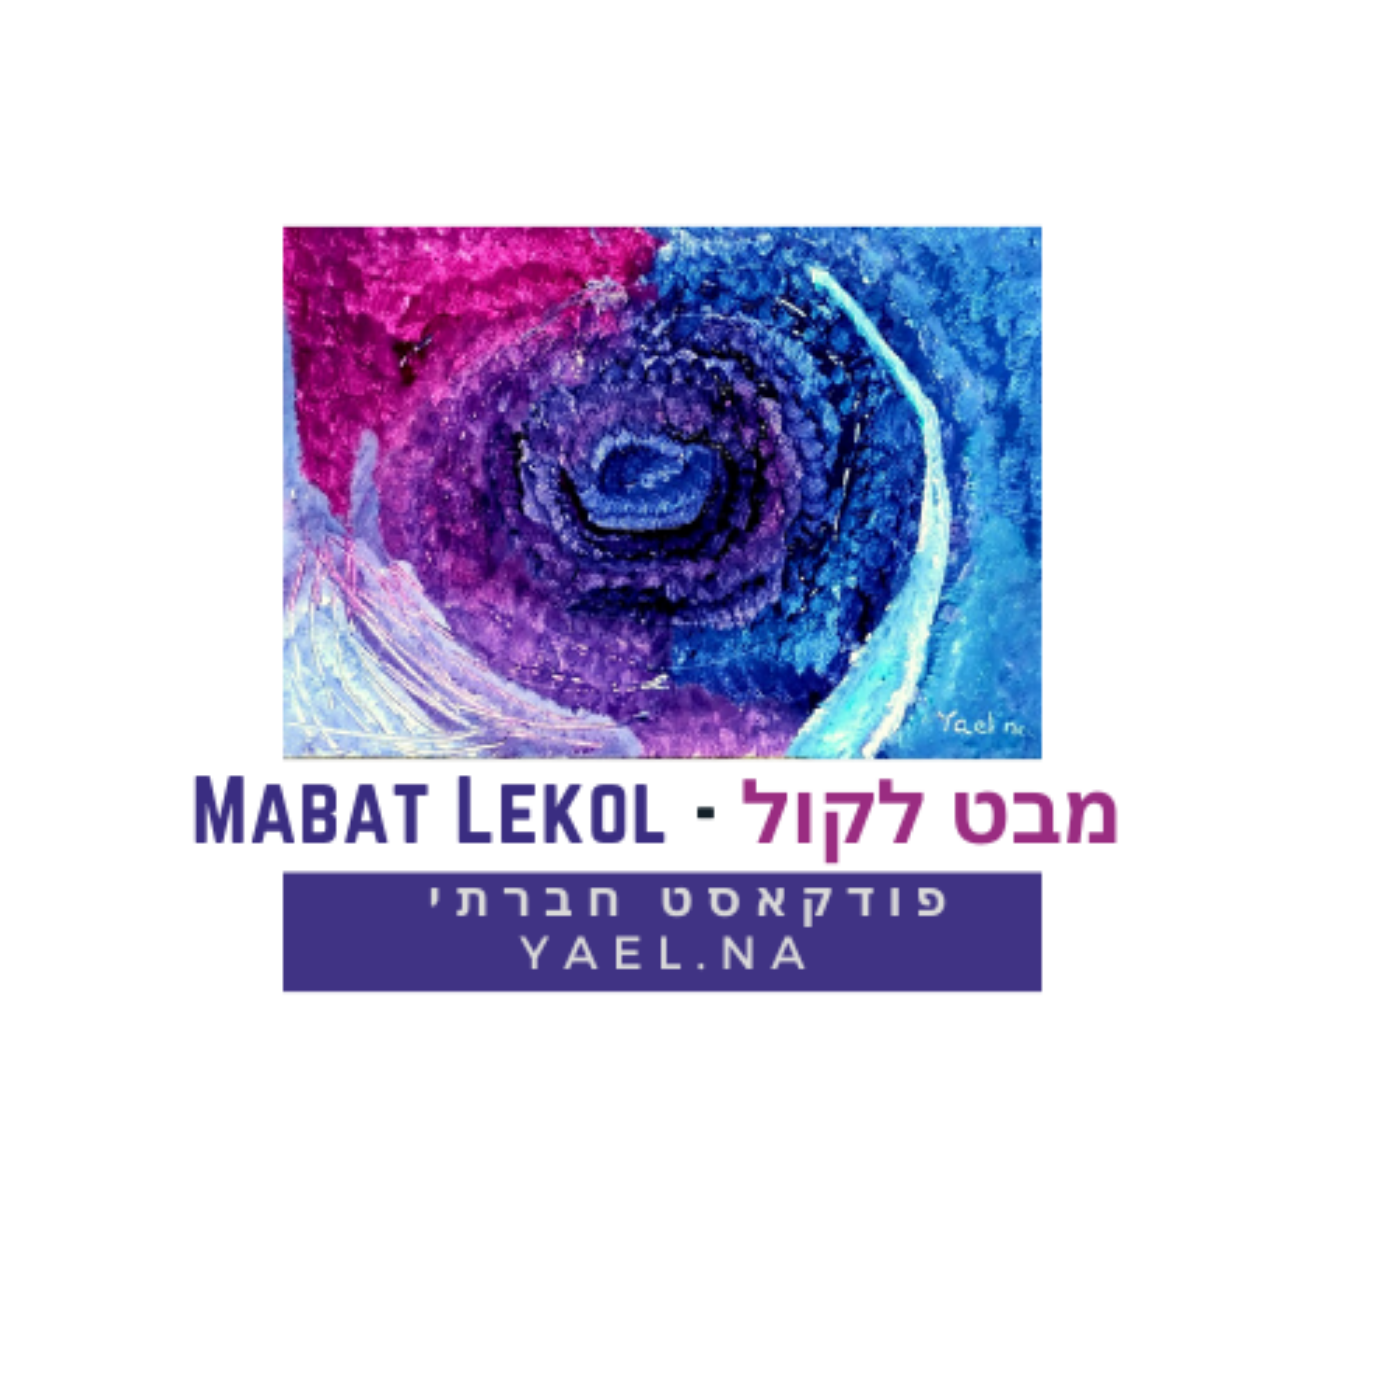 Mabat Lekol - מבט לקול - פודקאסט חברתי